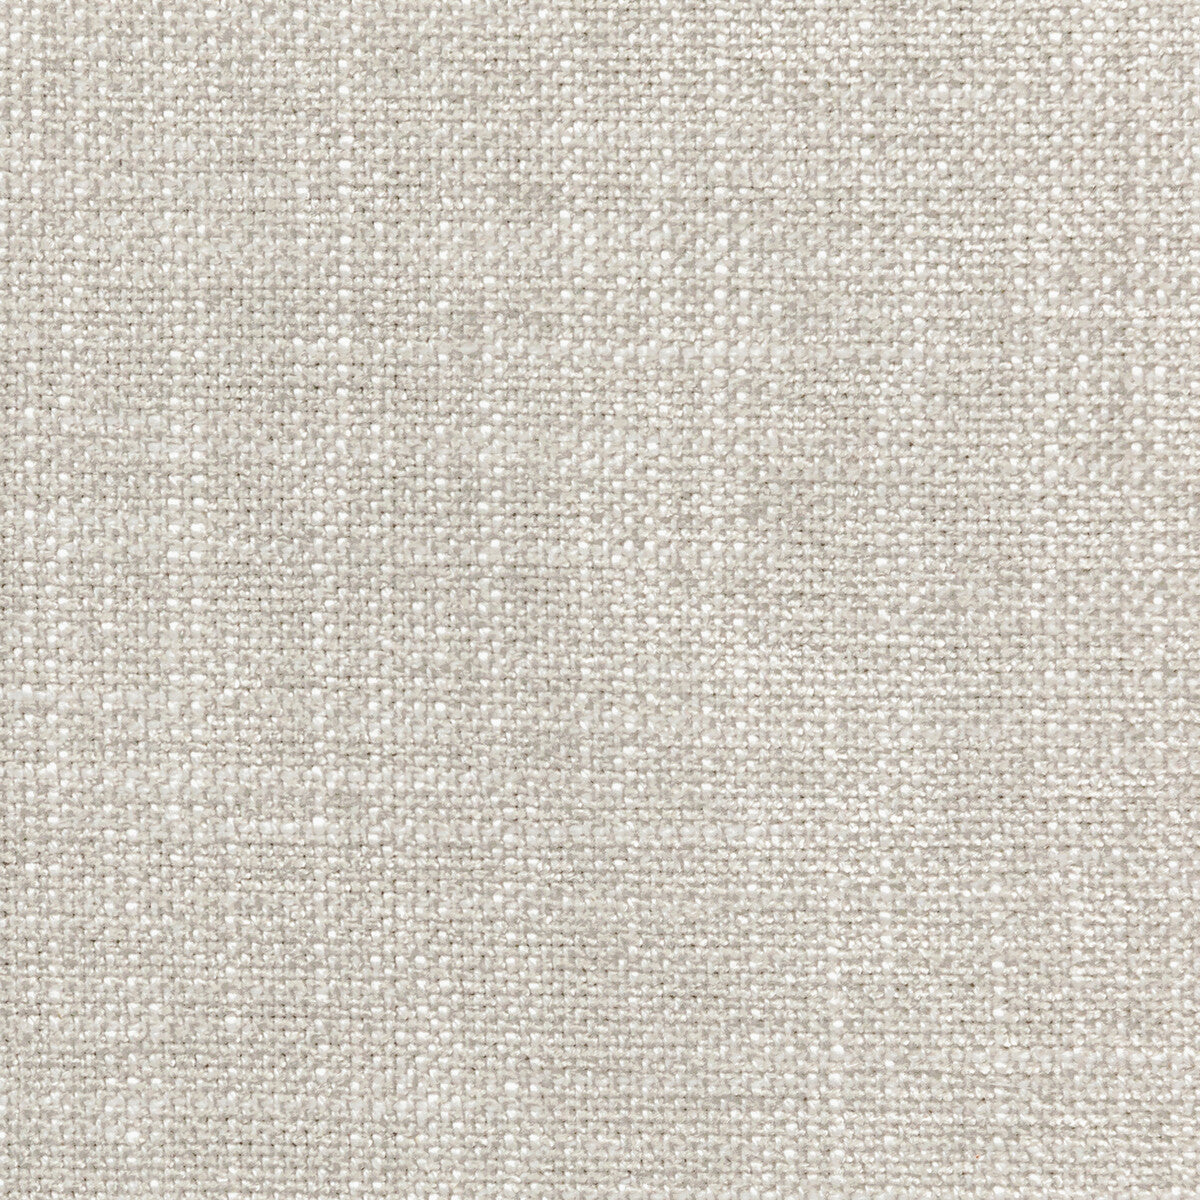 Okanda fabric in linen color - pattern 35768.11.0 - by Kravet Smart in the Performance Kravetarmor collection